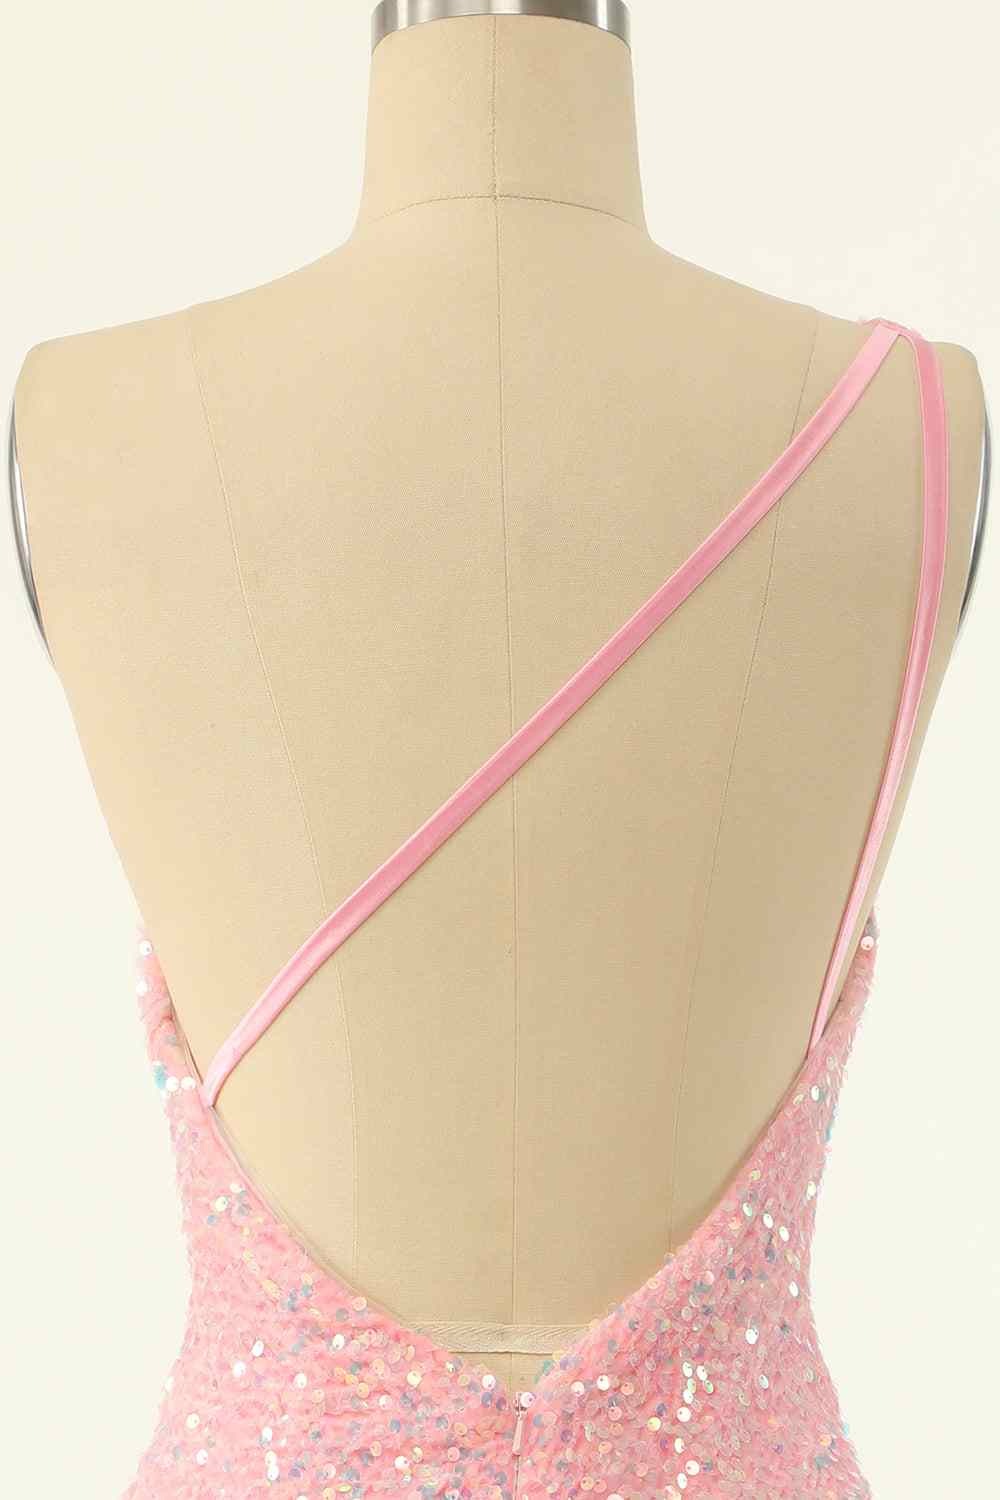 Pink Sheath One Shoulder Strap Back Sequins Mini Homecoming Dress